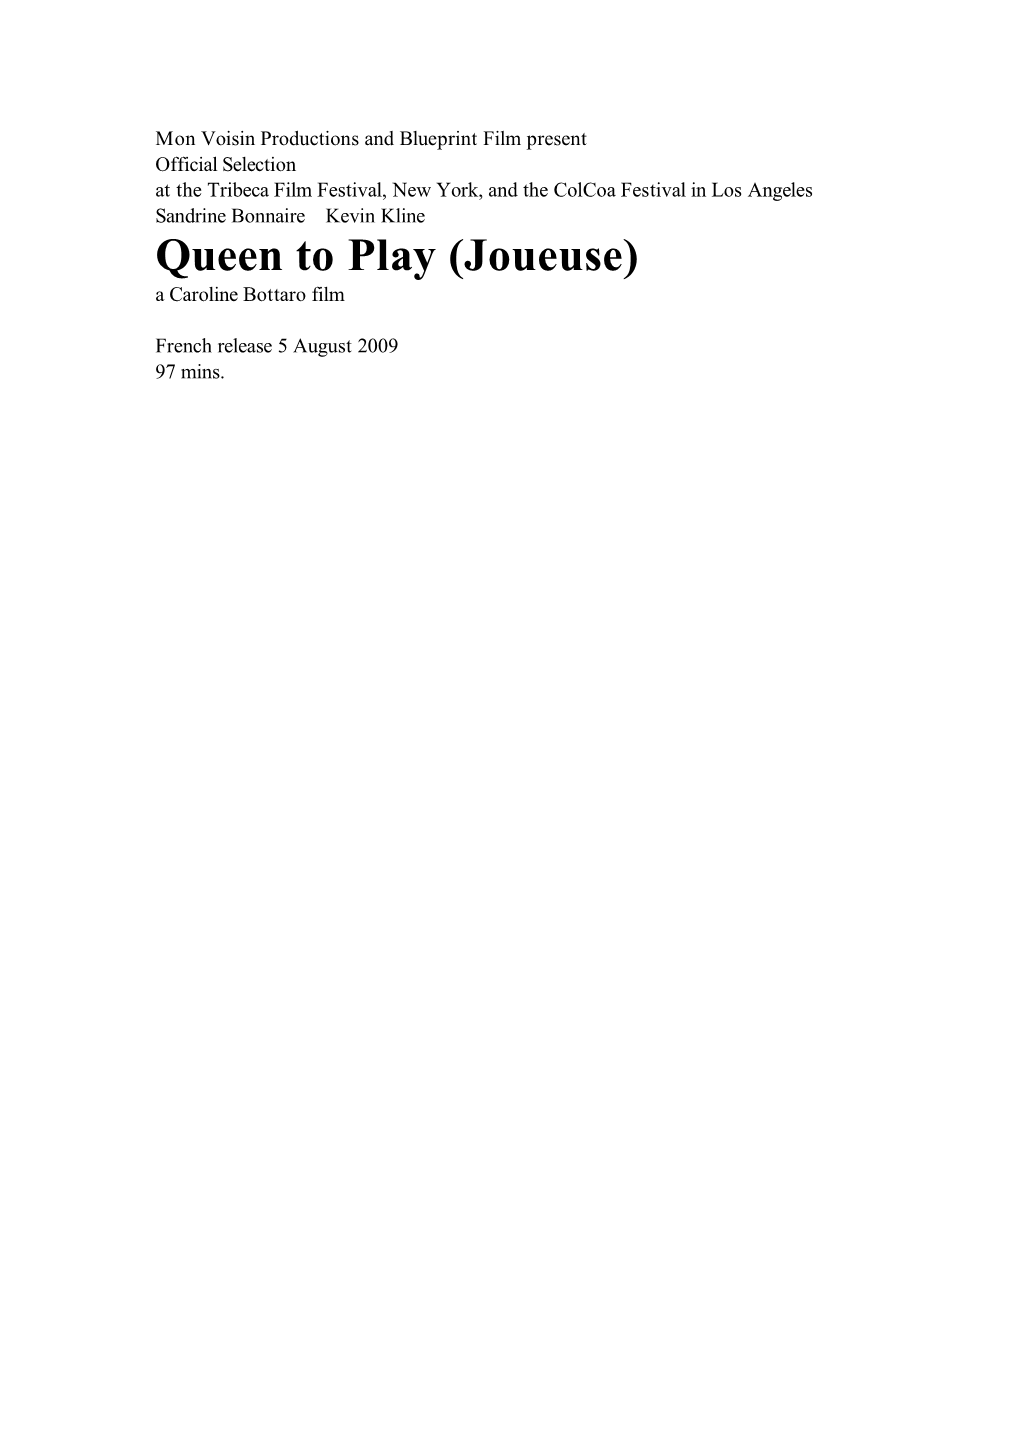 Queen to Play (Joueuse) a Caroline Bottaro Film